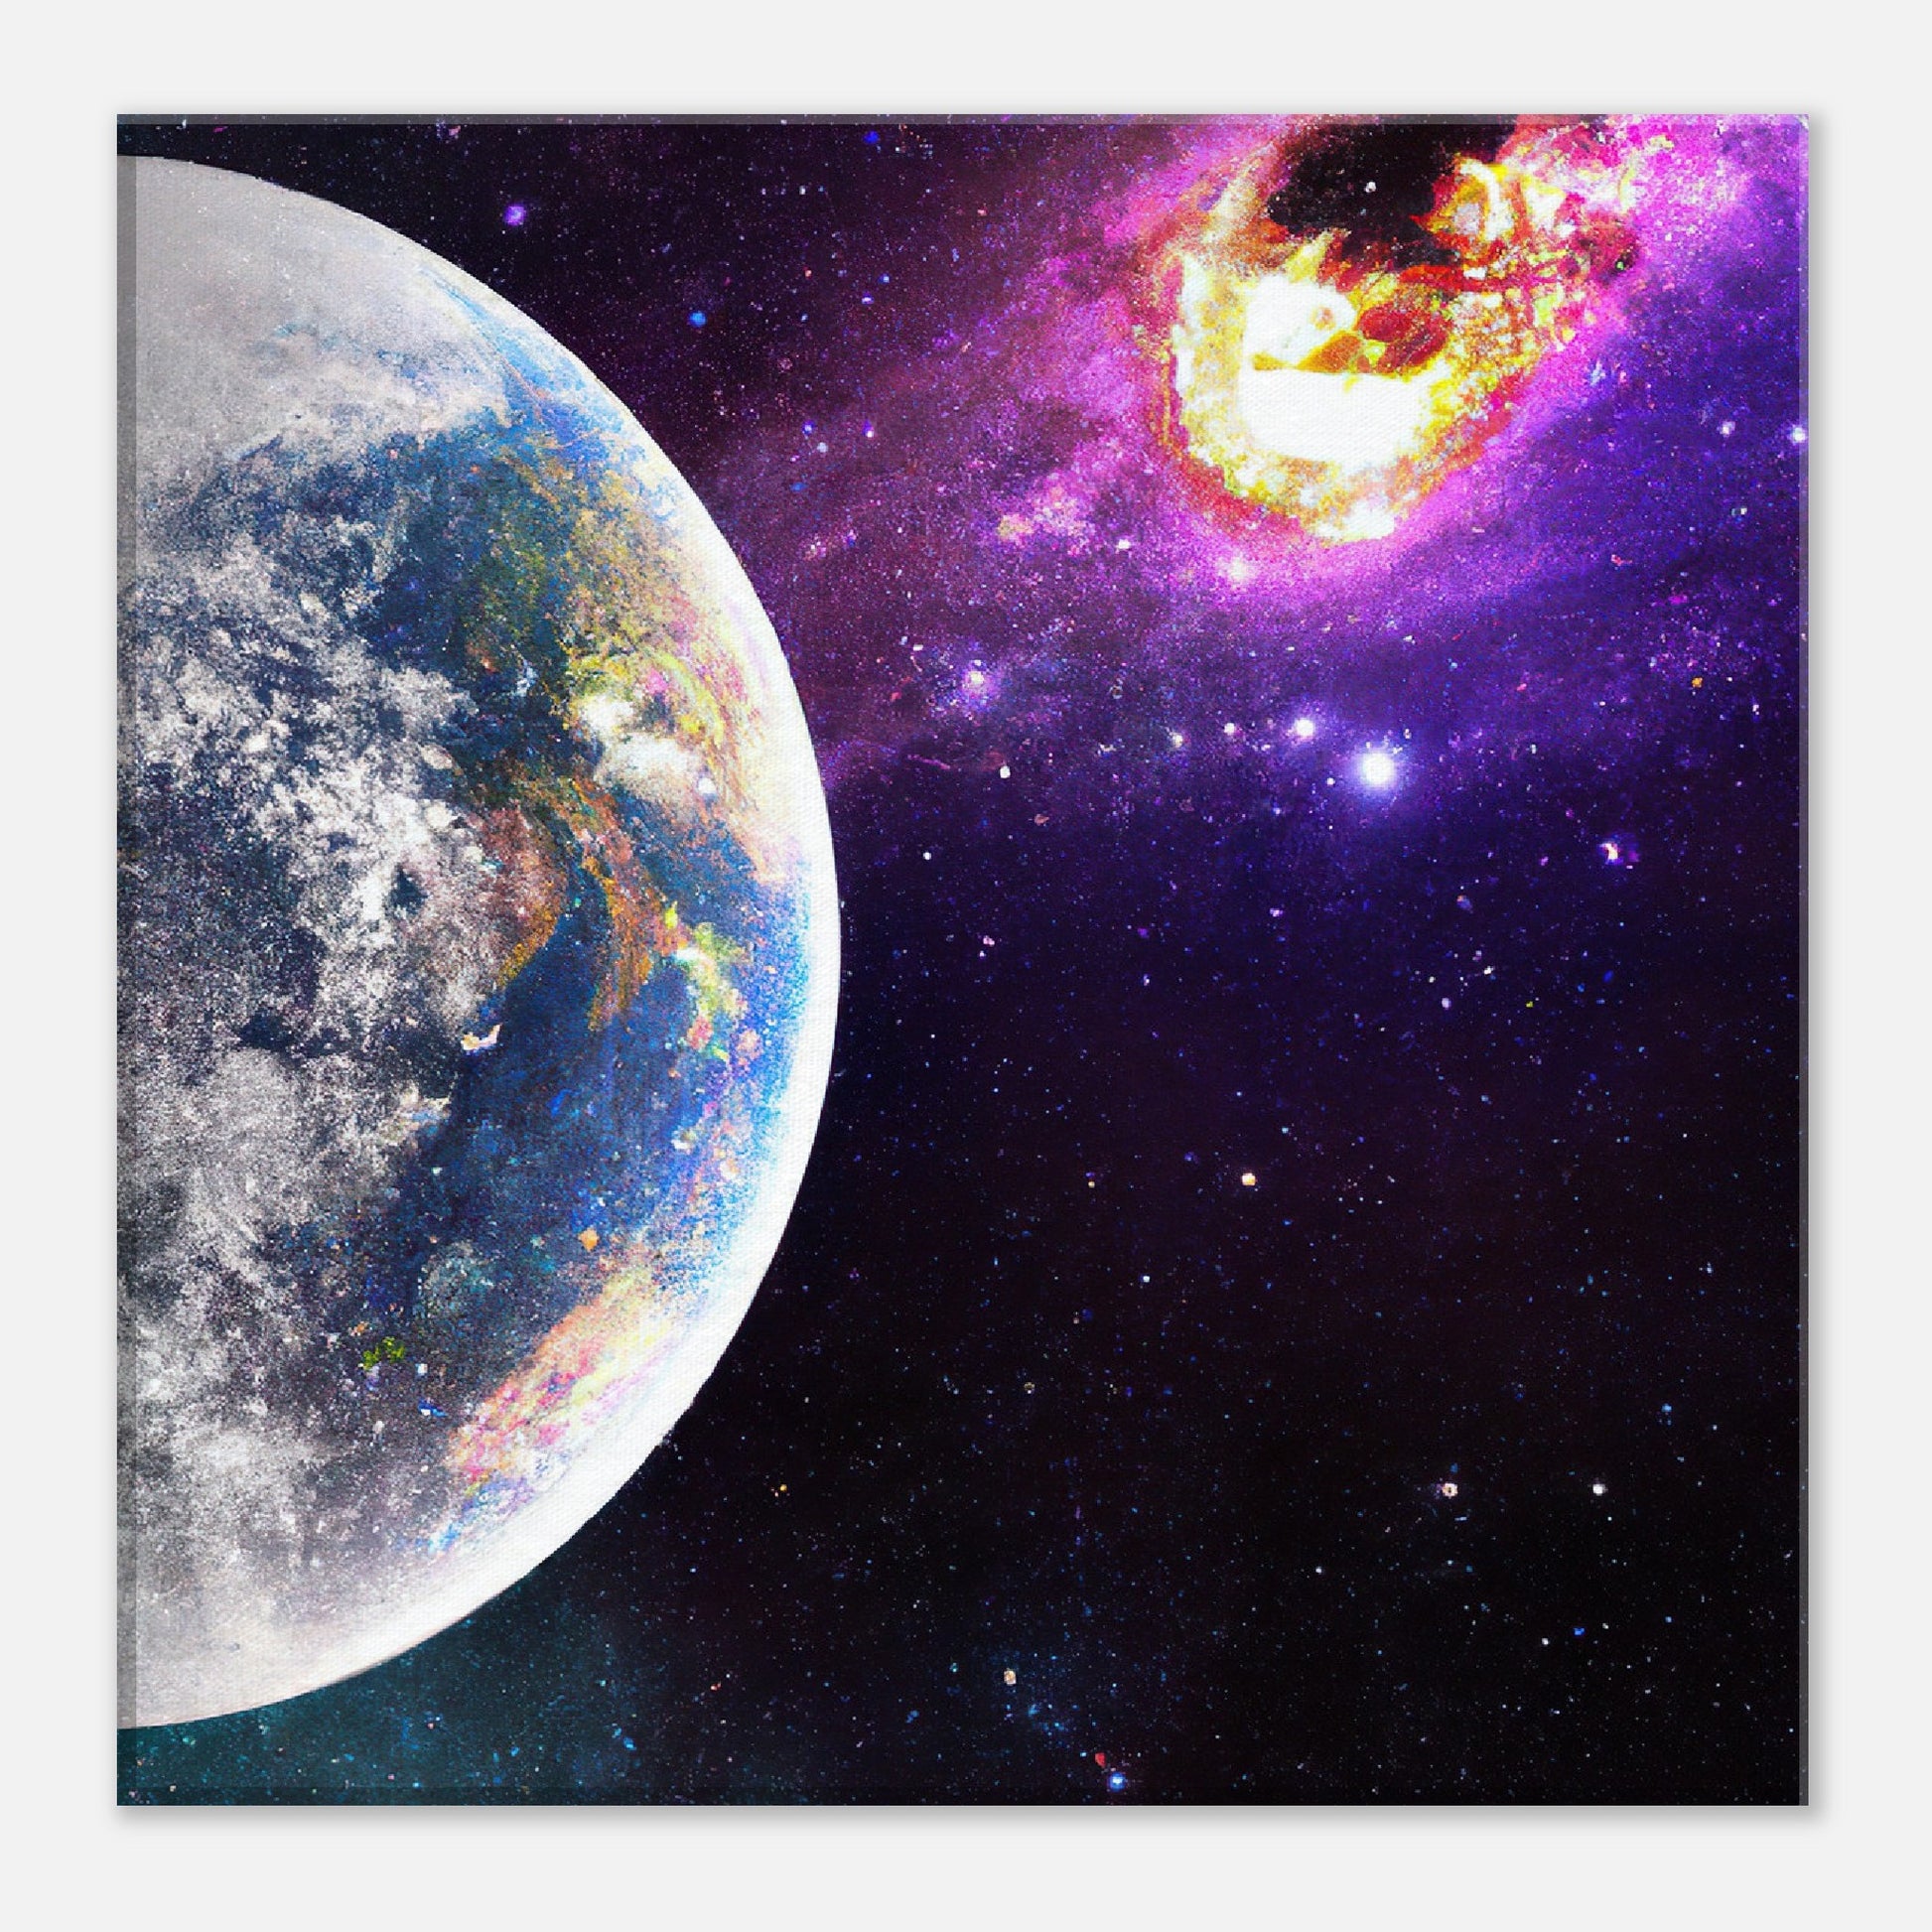 Leinwandbild - Planet und Komet im Weltraum - Digitaler Stil, KI-Kunst - RolConArt, Sci-Fi, 30x30-cm-12x12